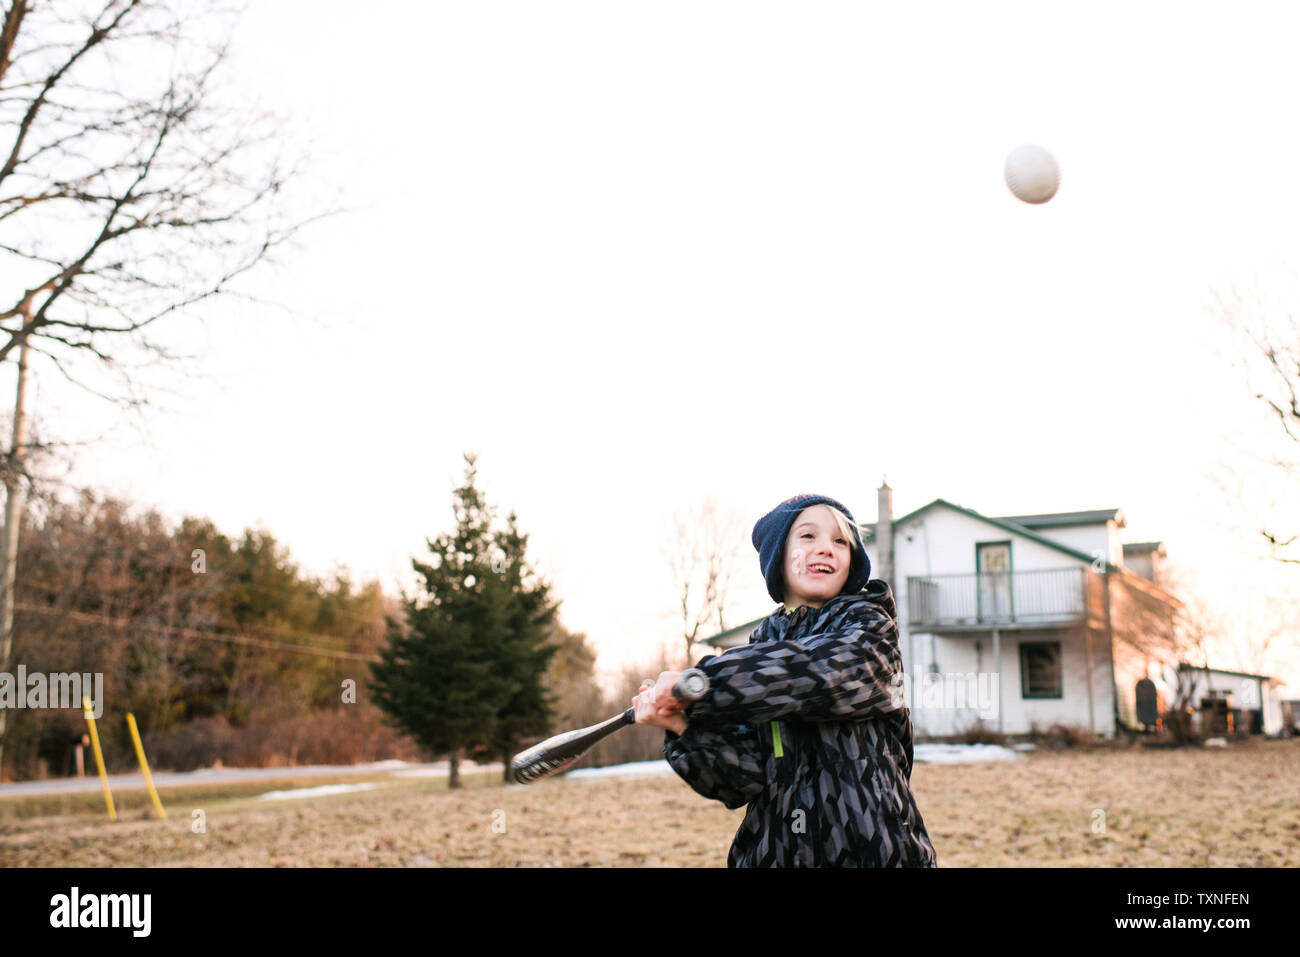 Boy hitting baseball ball in rural field, action Stock Photo